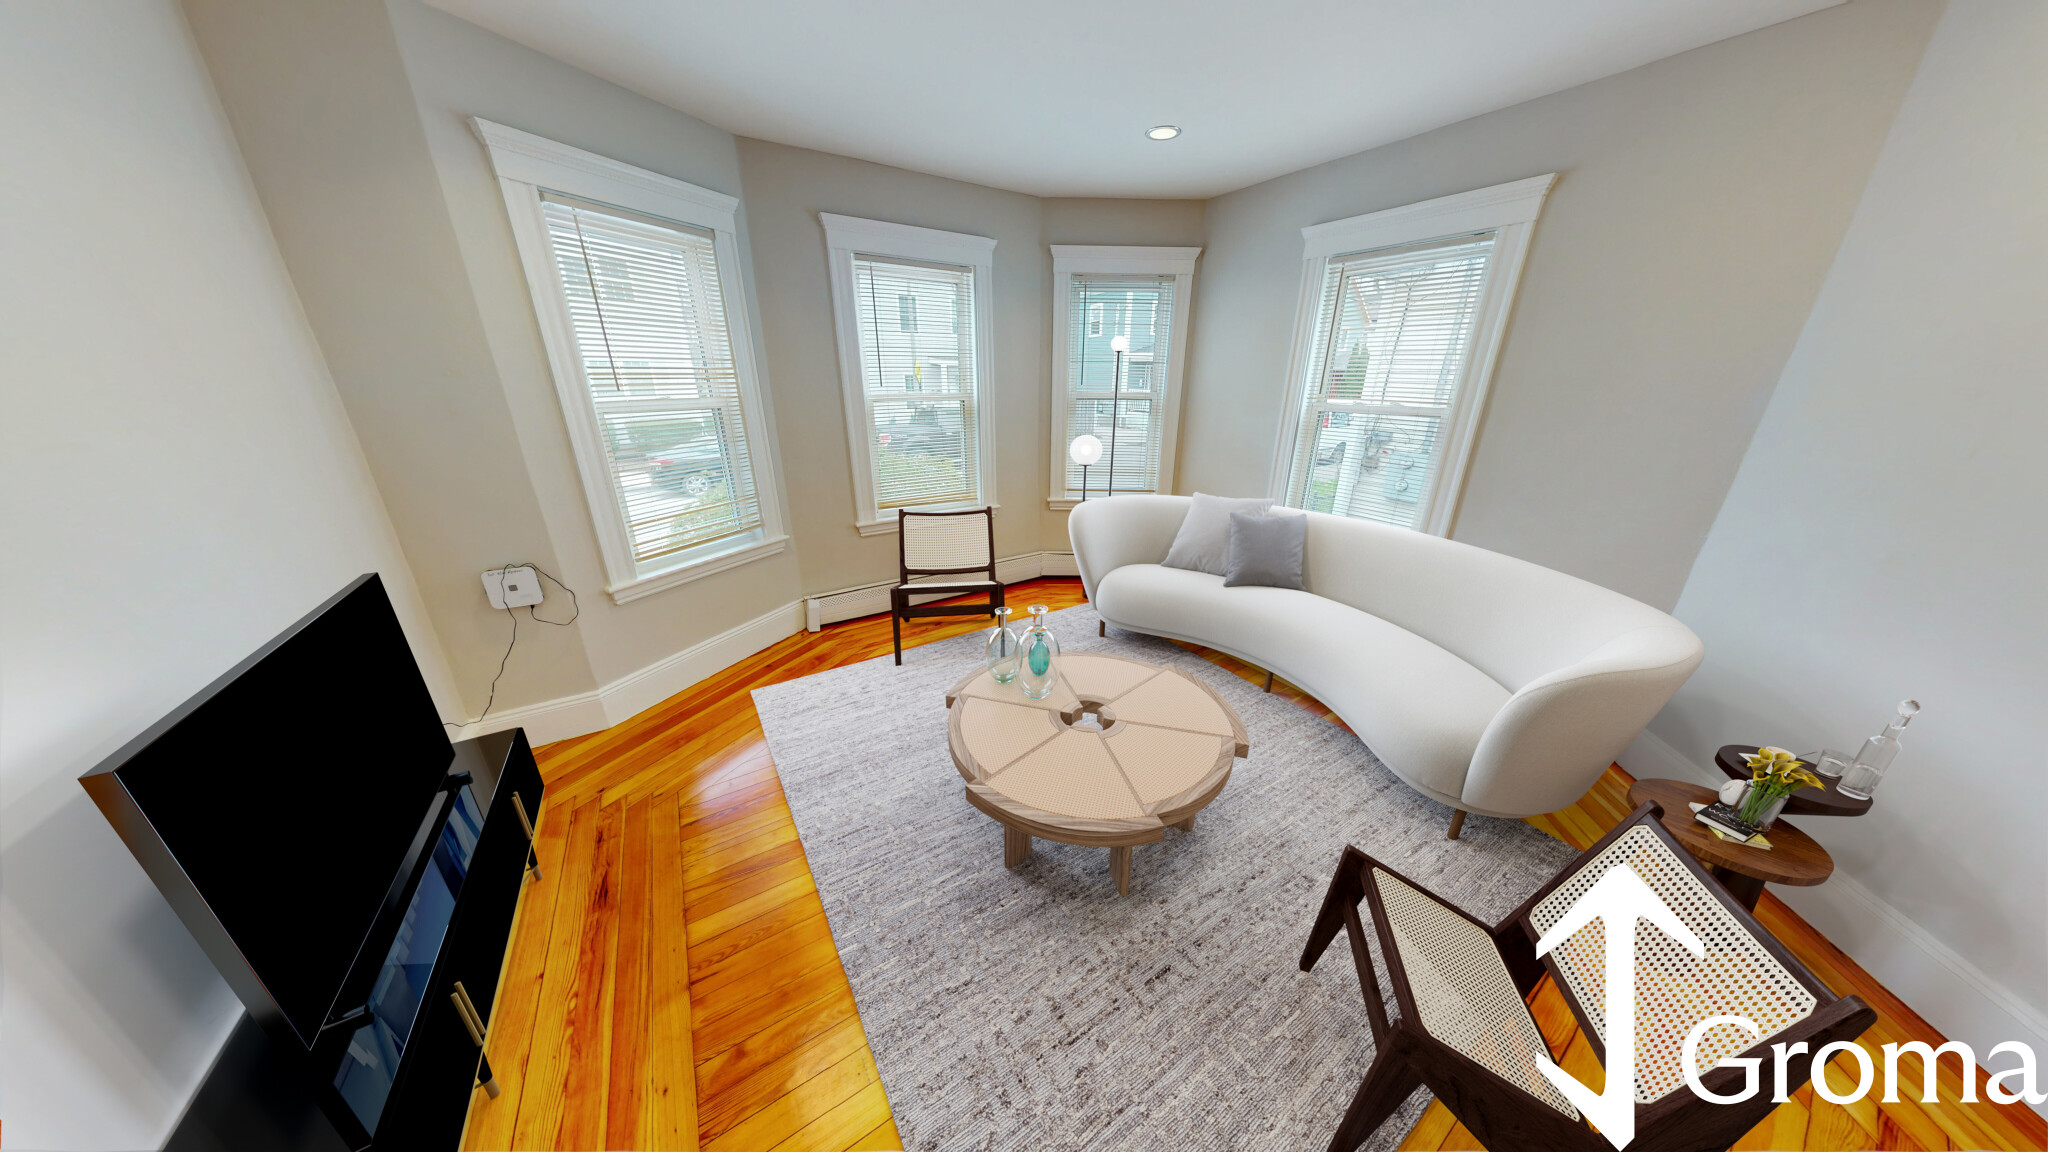 Photos of apartment on East St.,Boston MA 02122